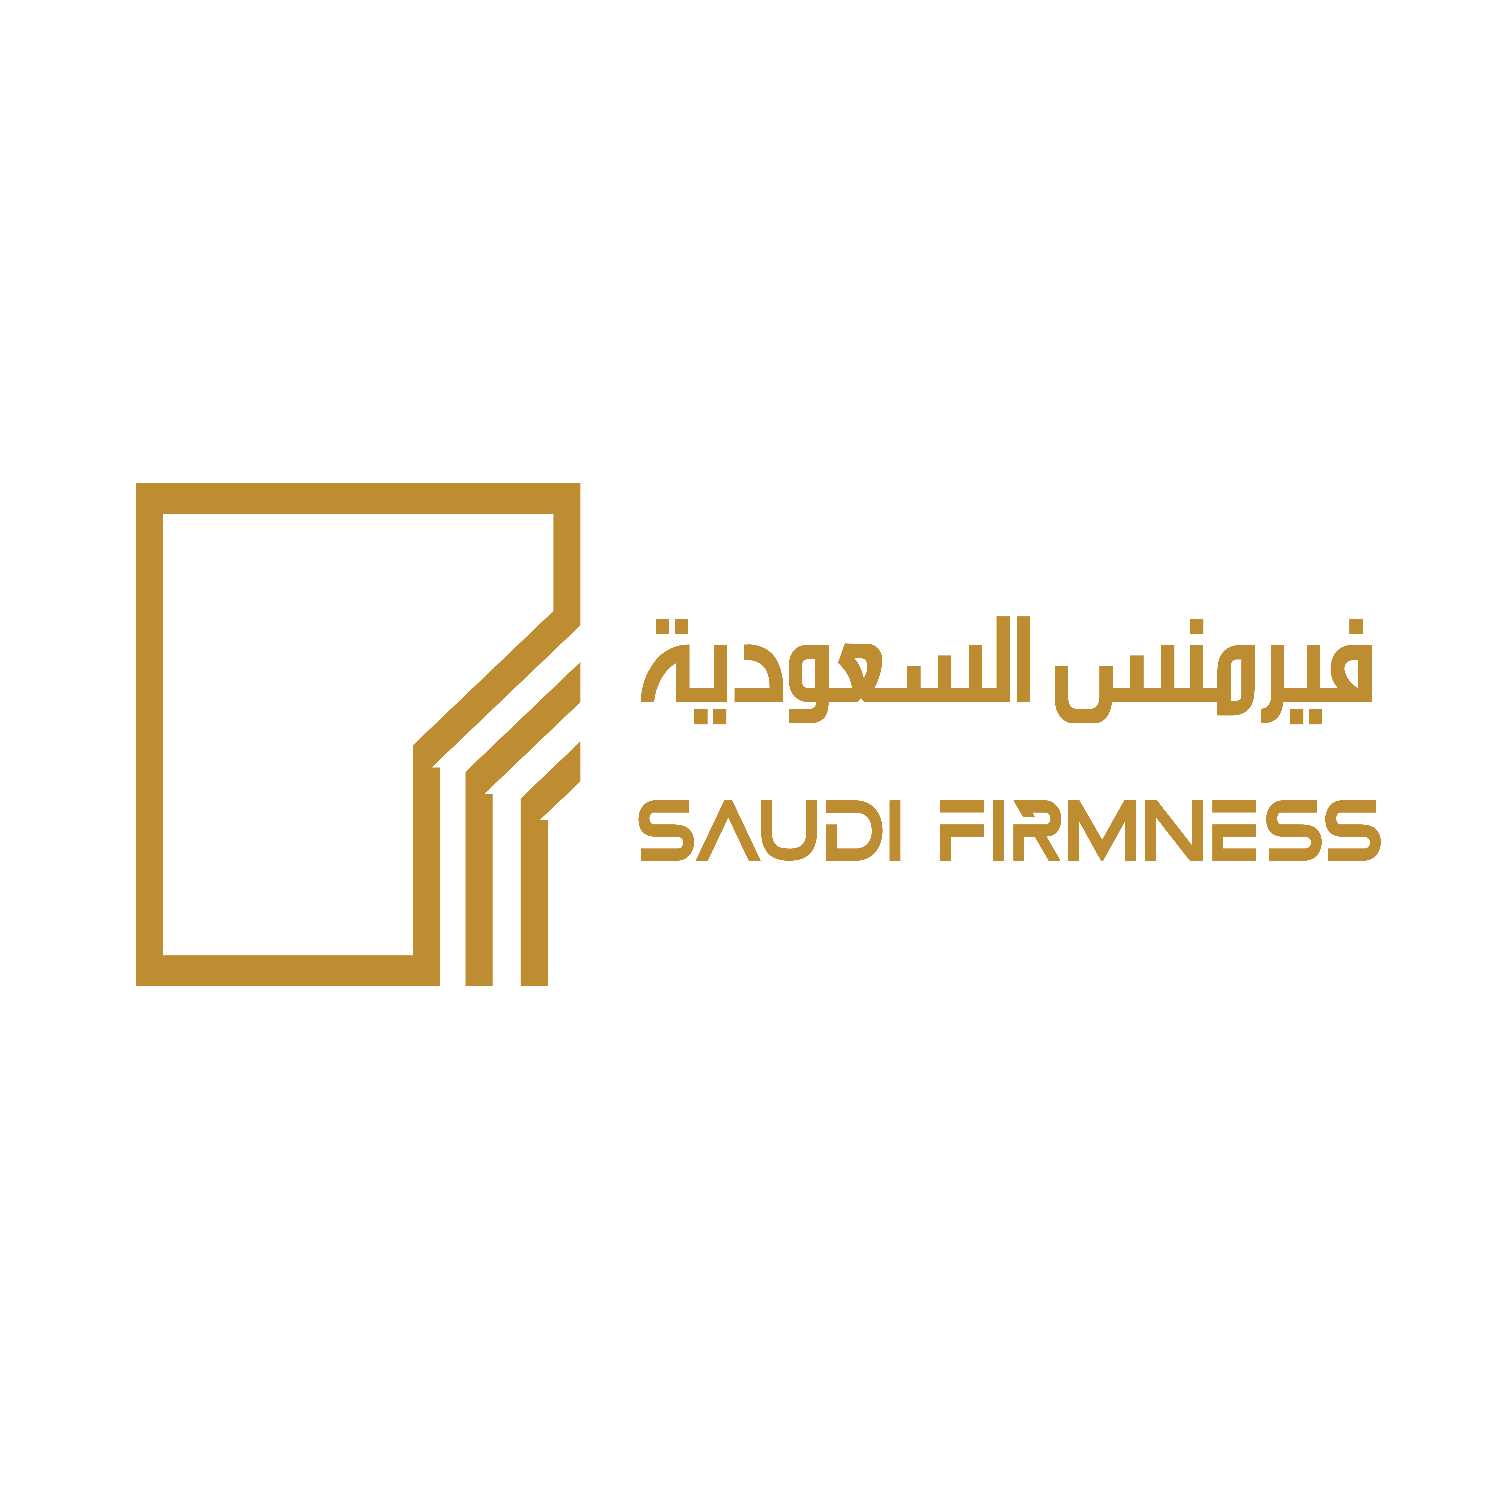 Saudi Firmness